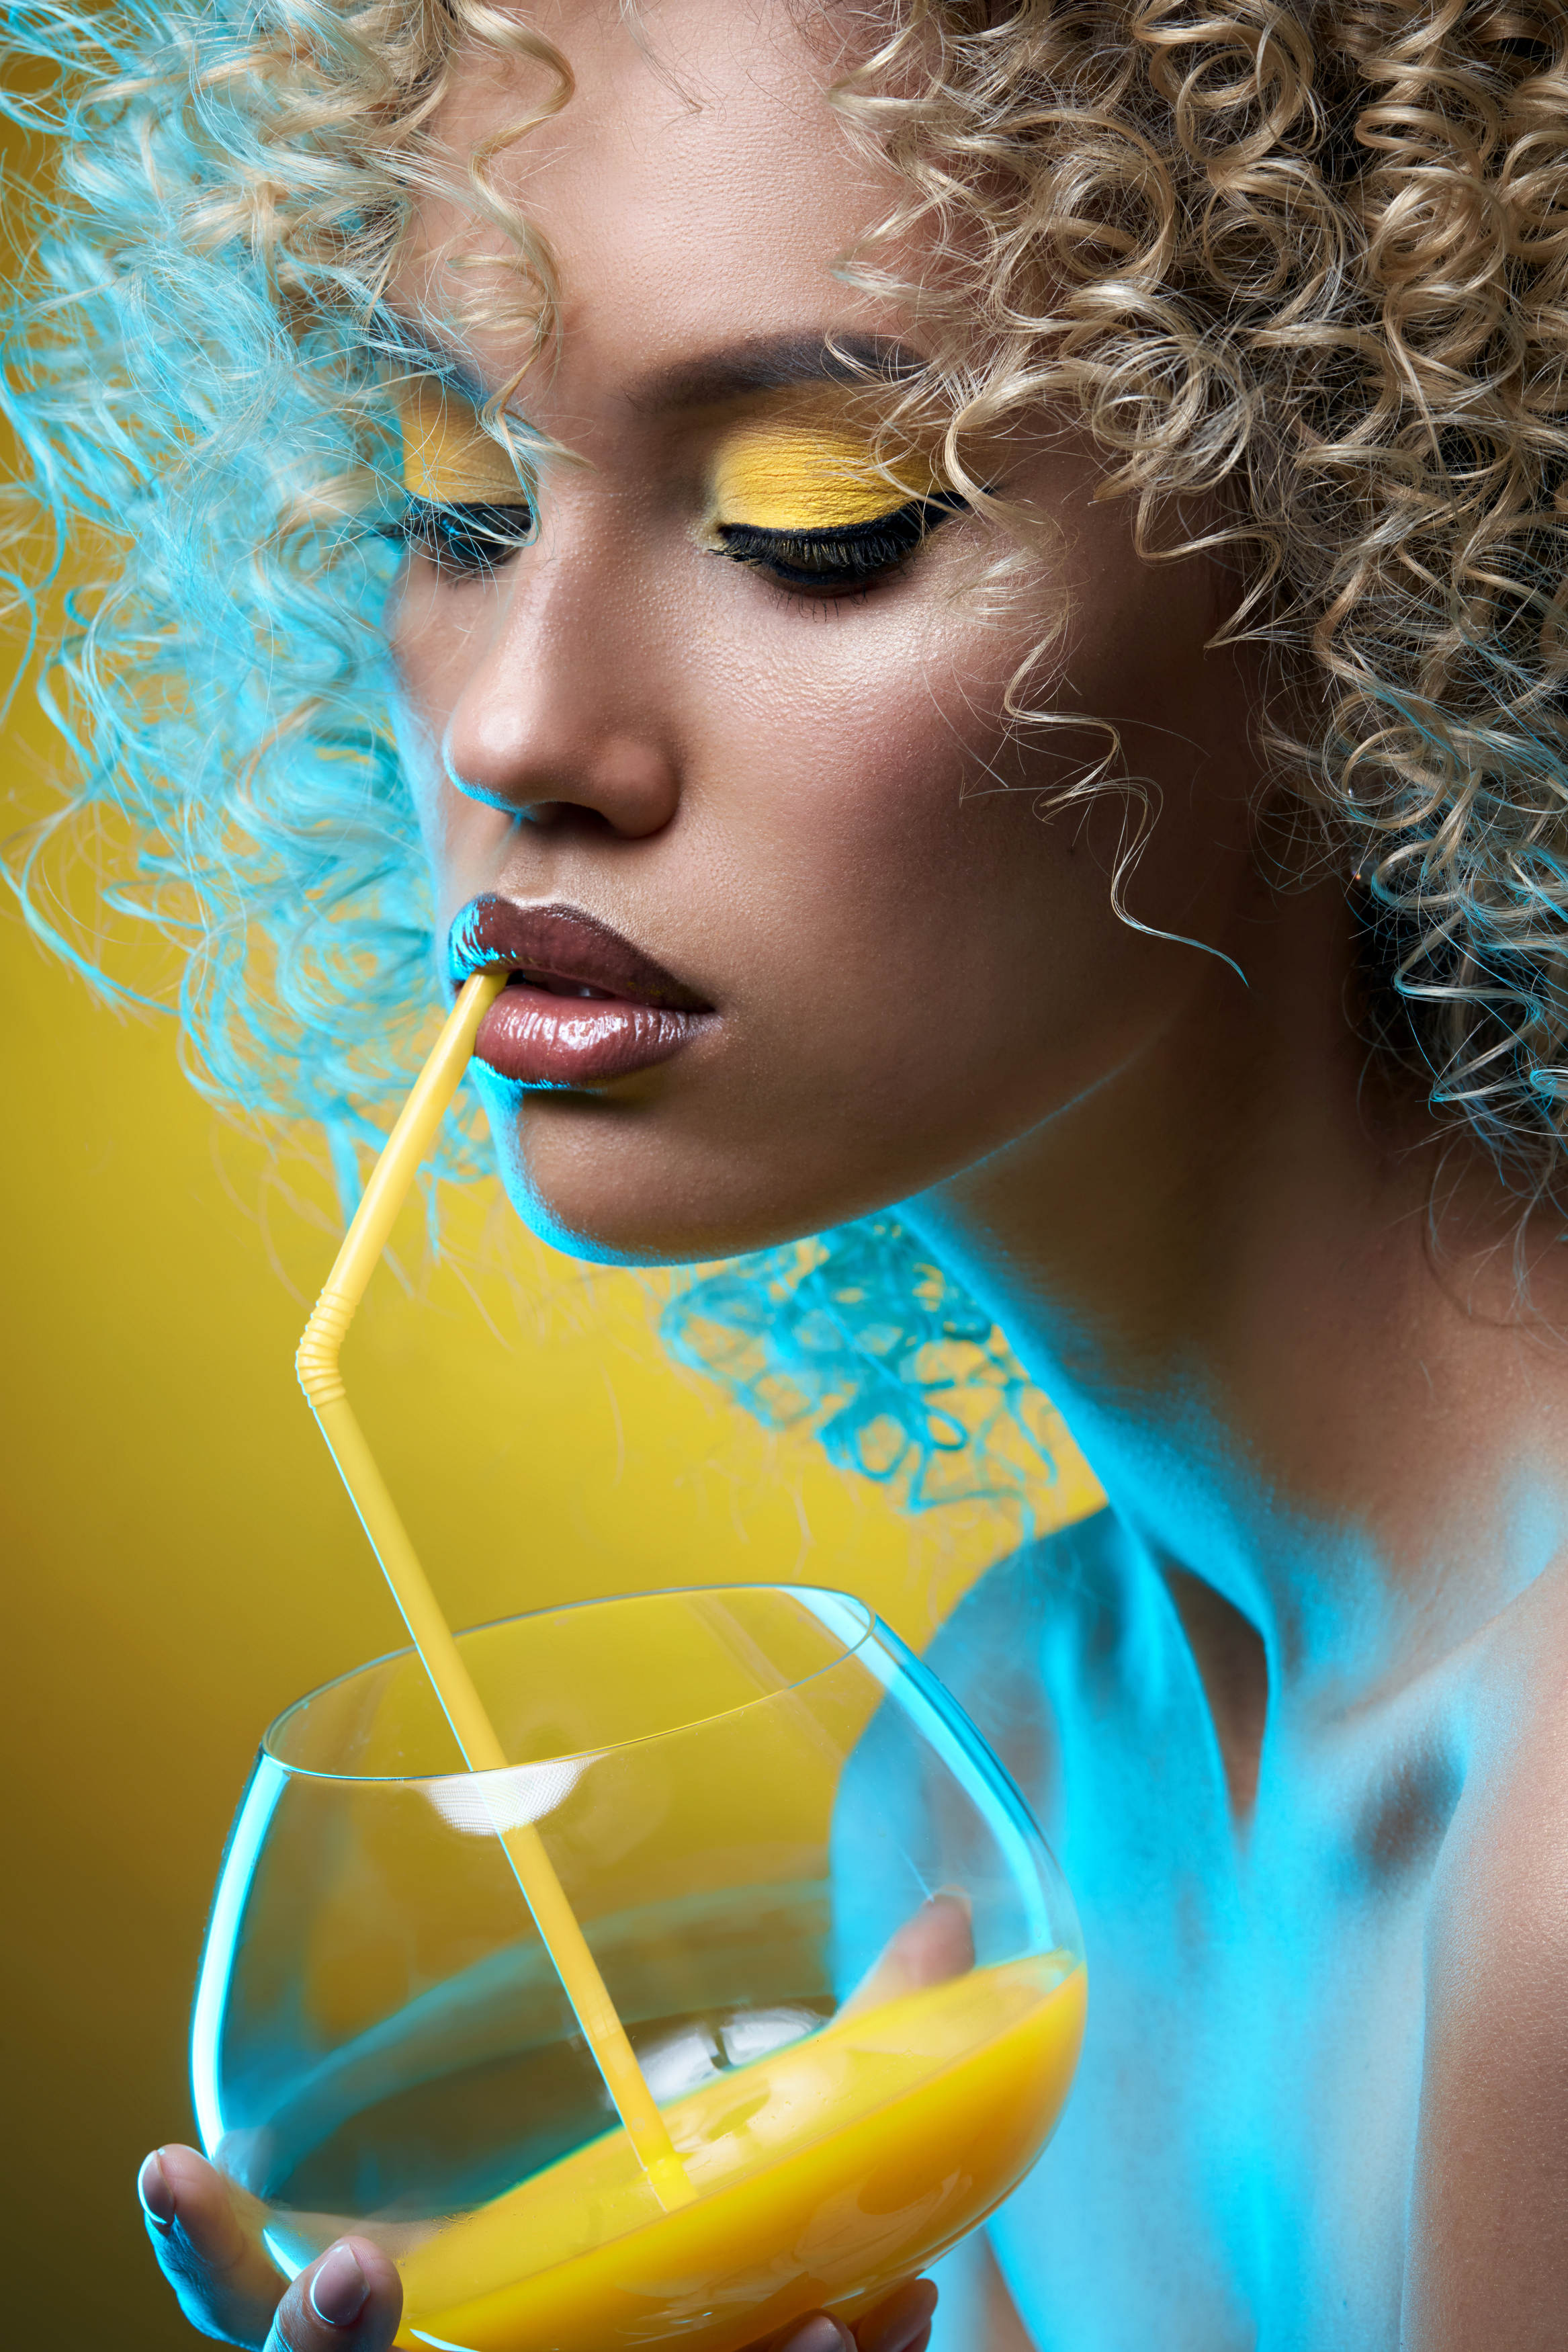 Evgenii Kirillov Women Blonde Curly Hair Makeup Eyeshadow Lipstick Drinking Juice Yellow Blue Light  2334x3500